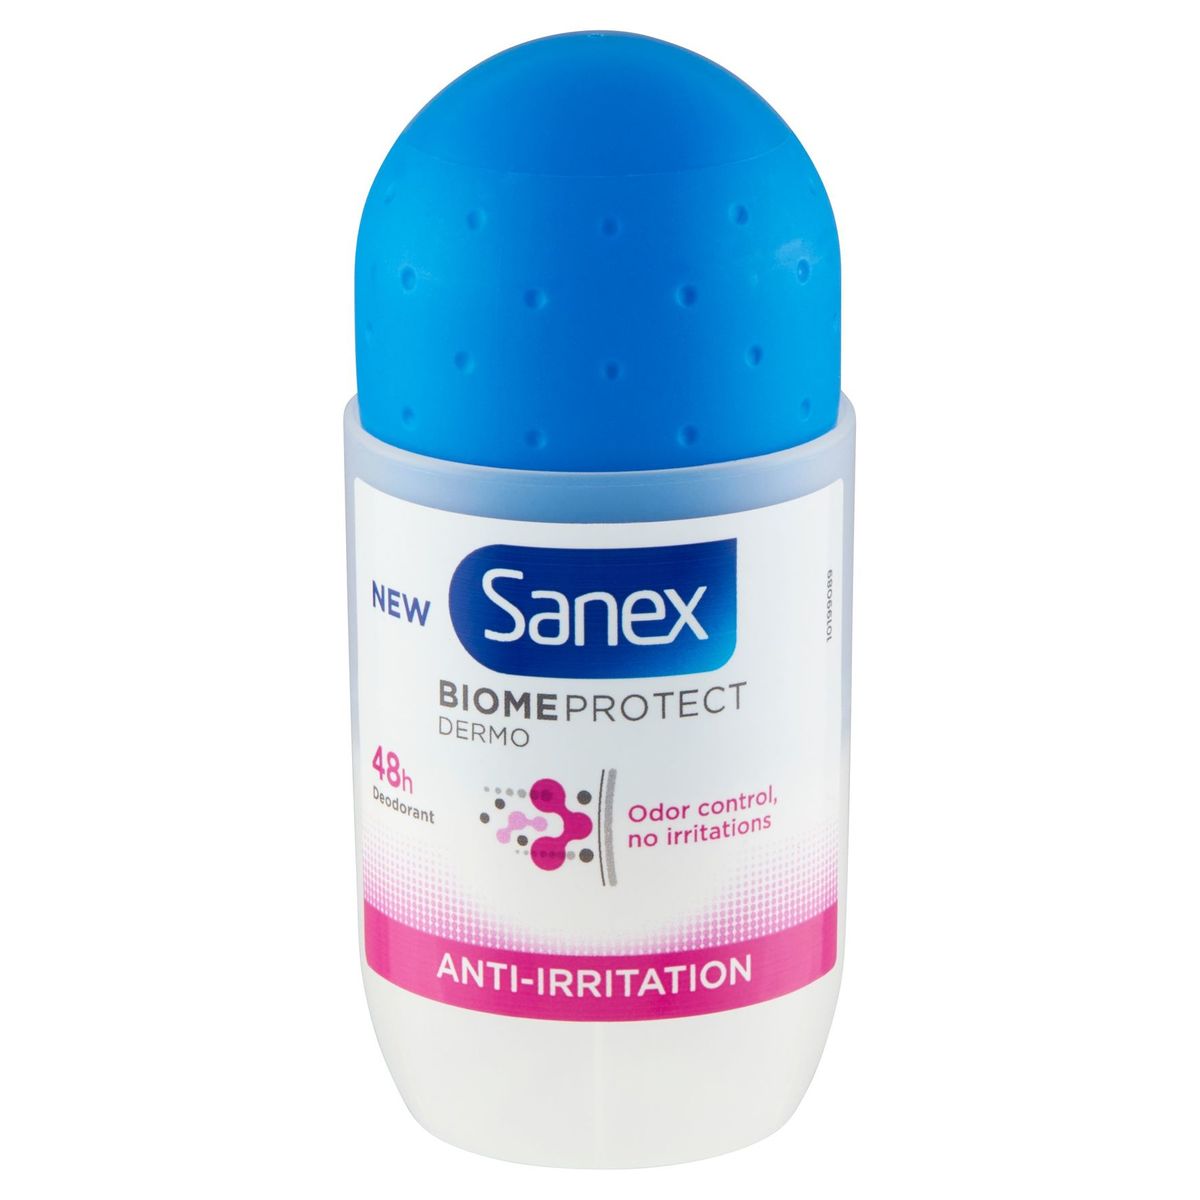 Sanex roll on Biomeprotect Dermo Anti-irritation 50ml